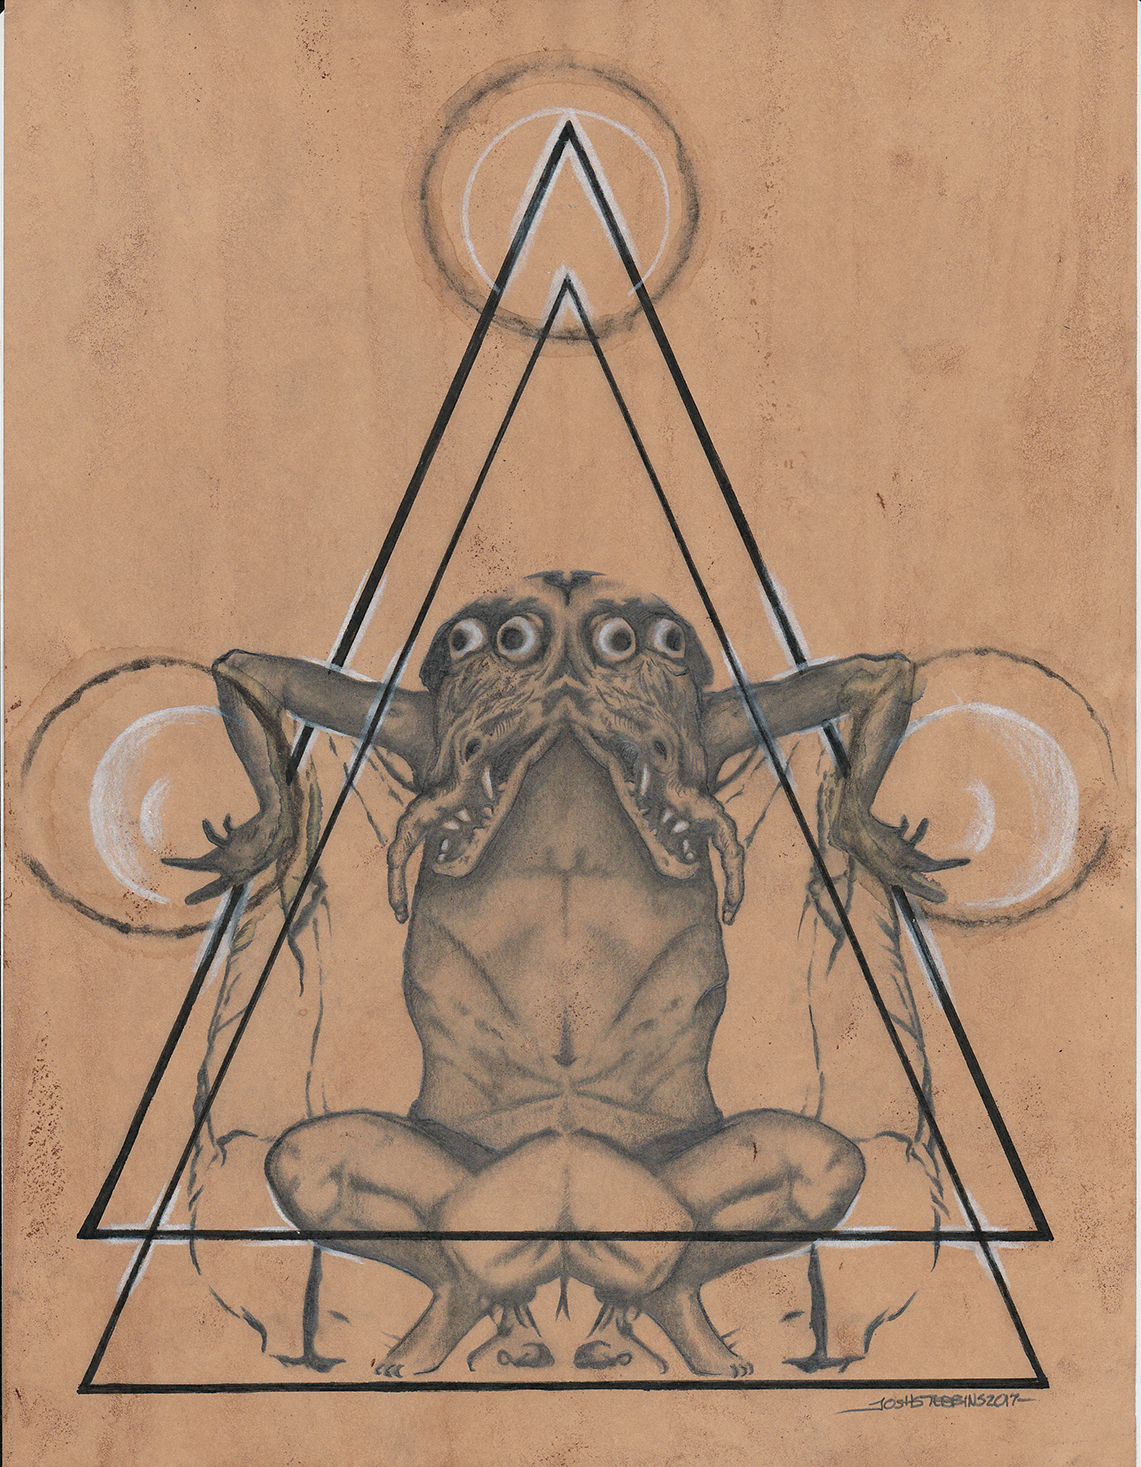  Josh Stebbins, The Incubus, Conjuring Black Triangles. 